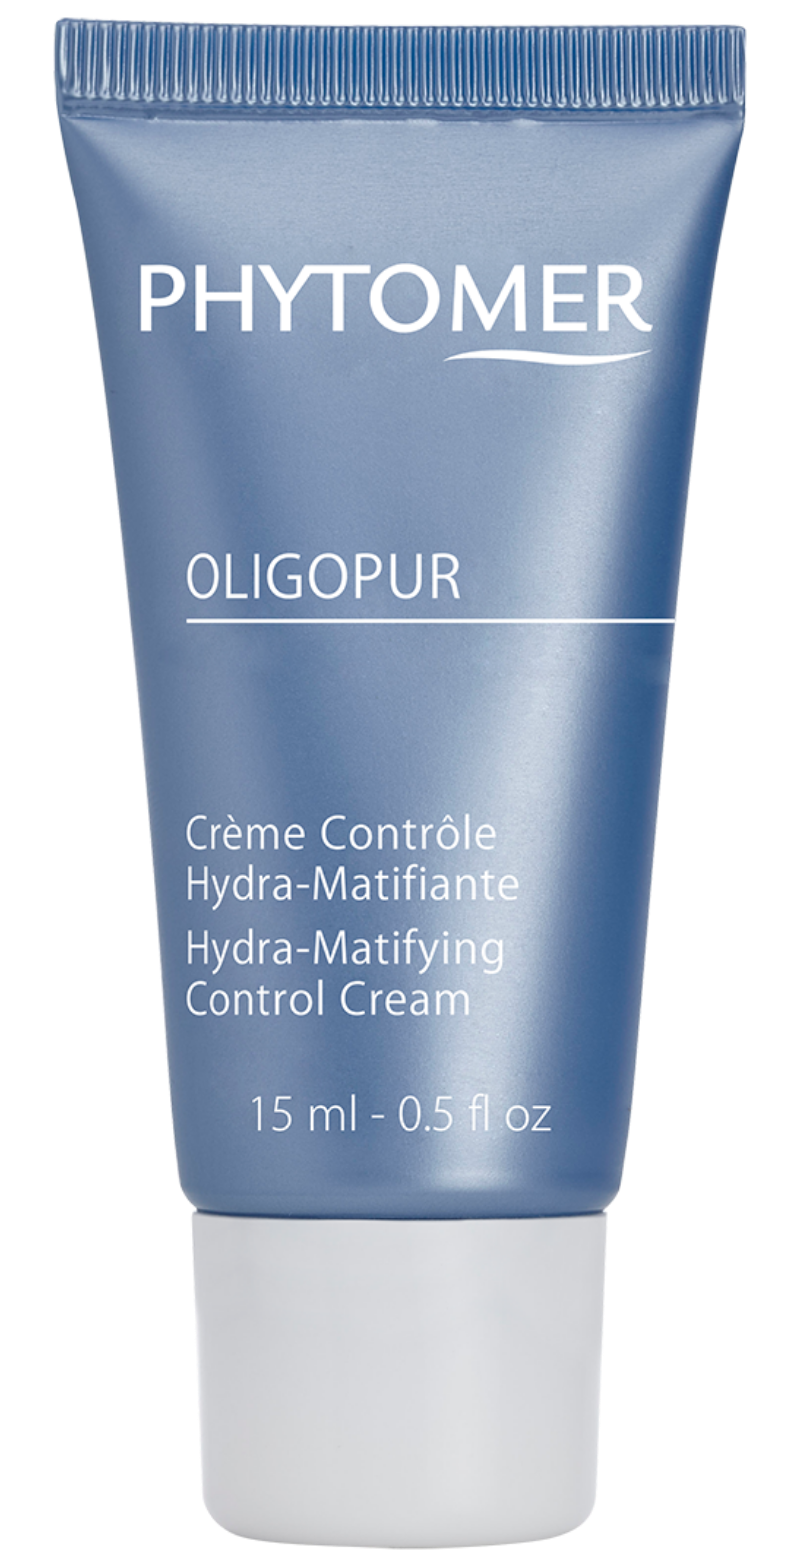 's Phytomer OLIGOPUR Hydra-Matifying Control Cream - Bellini's Skin and Parfumerie 